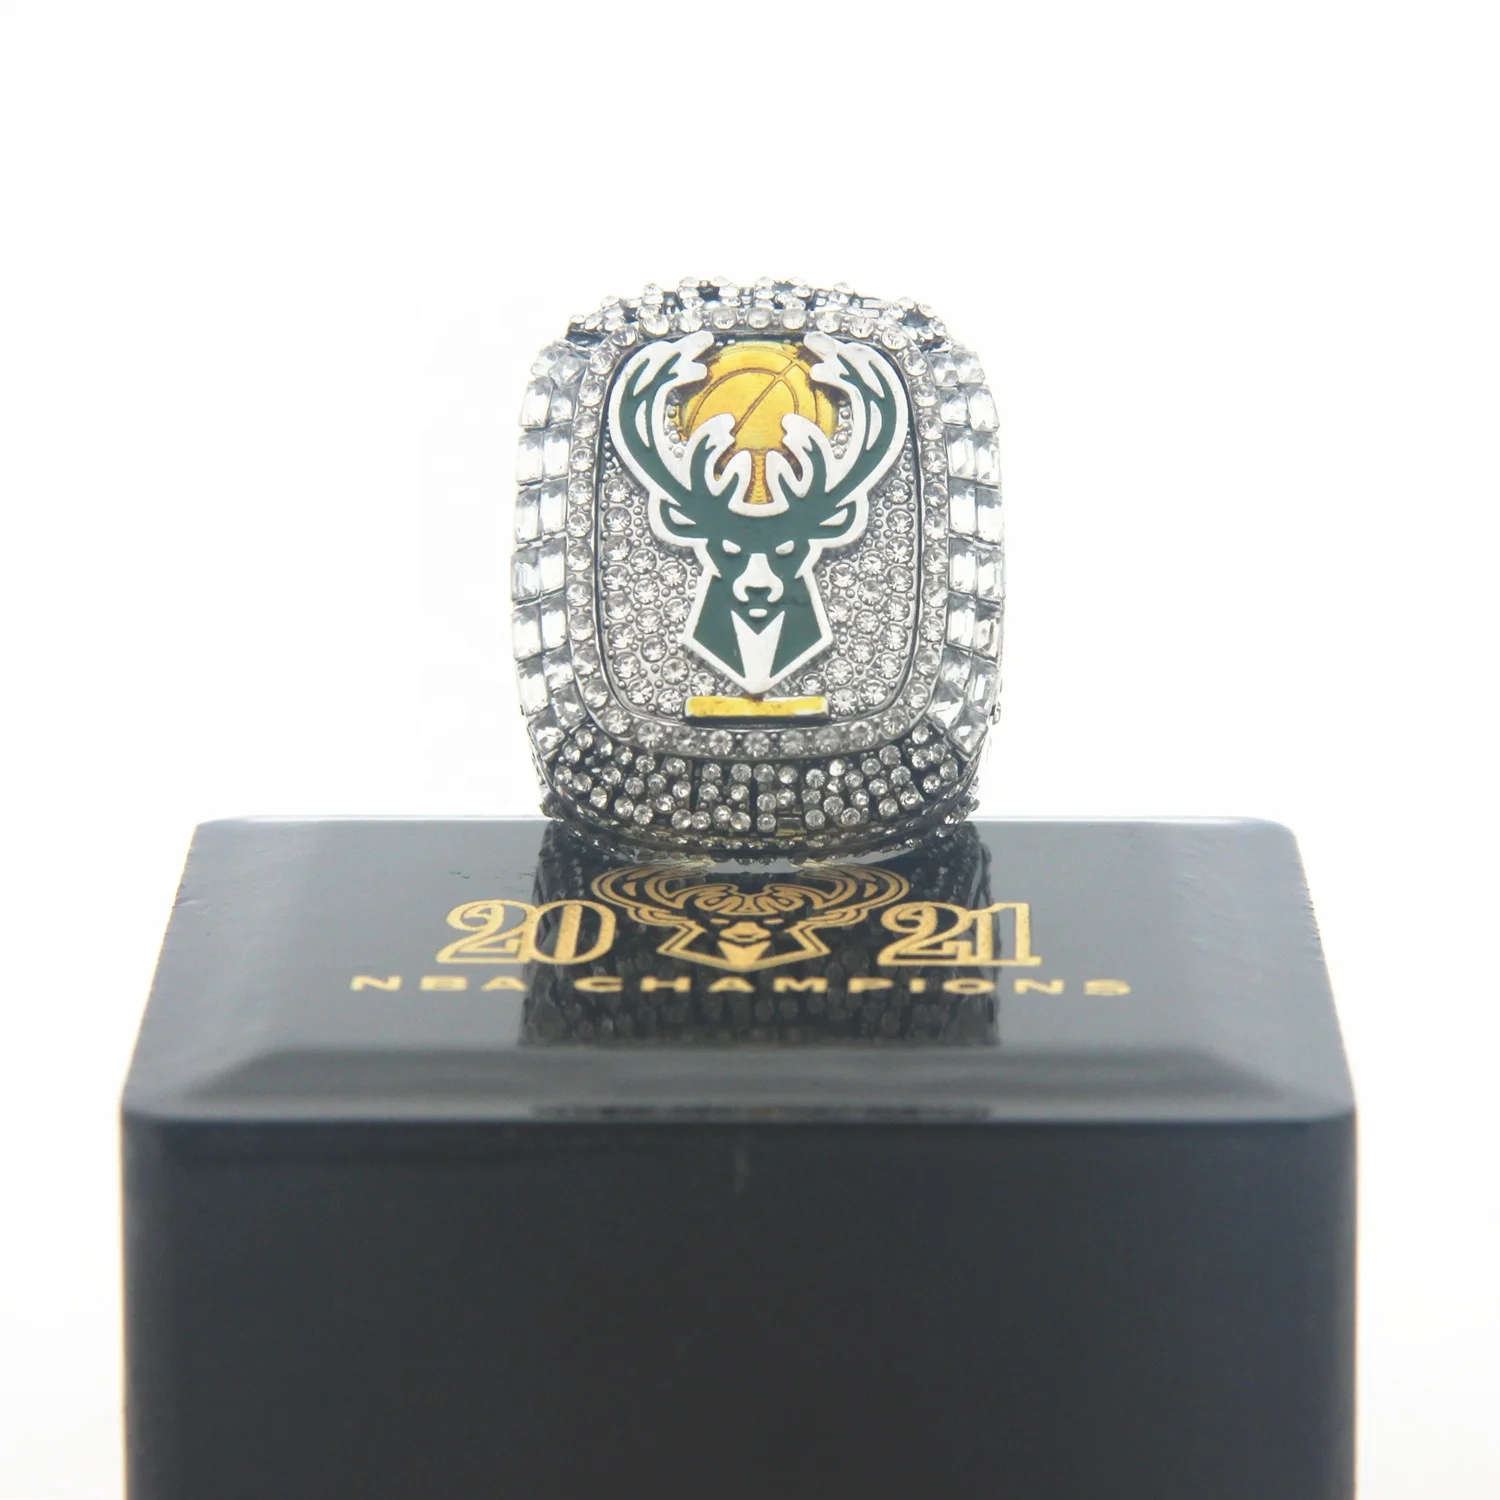 

Linghu Custom Men Youth Sports Basketball Replica Rings Display Gift Box 2021 Milwaukee Bucks Championship Ring, Picture shows